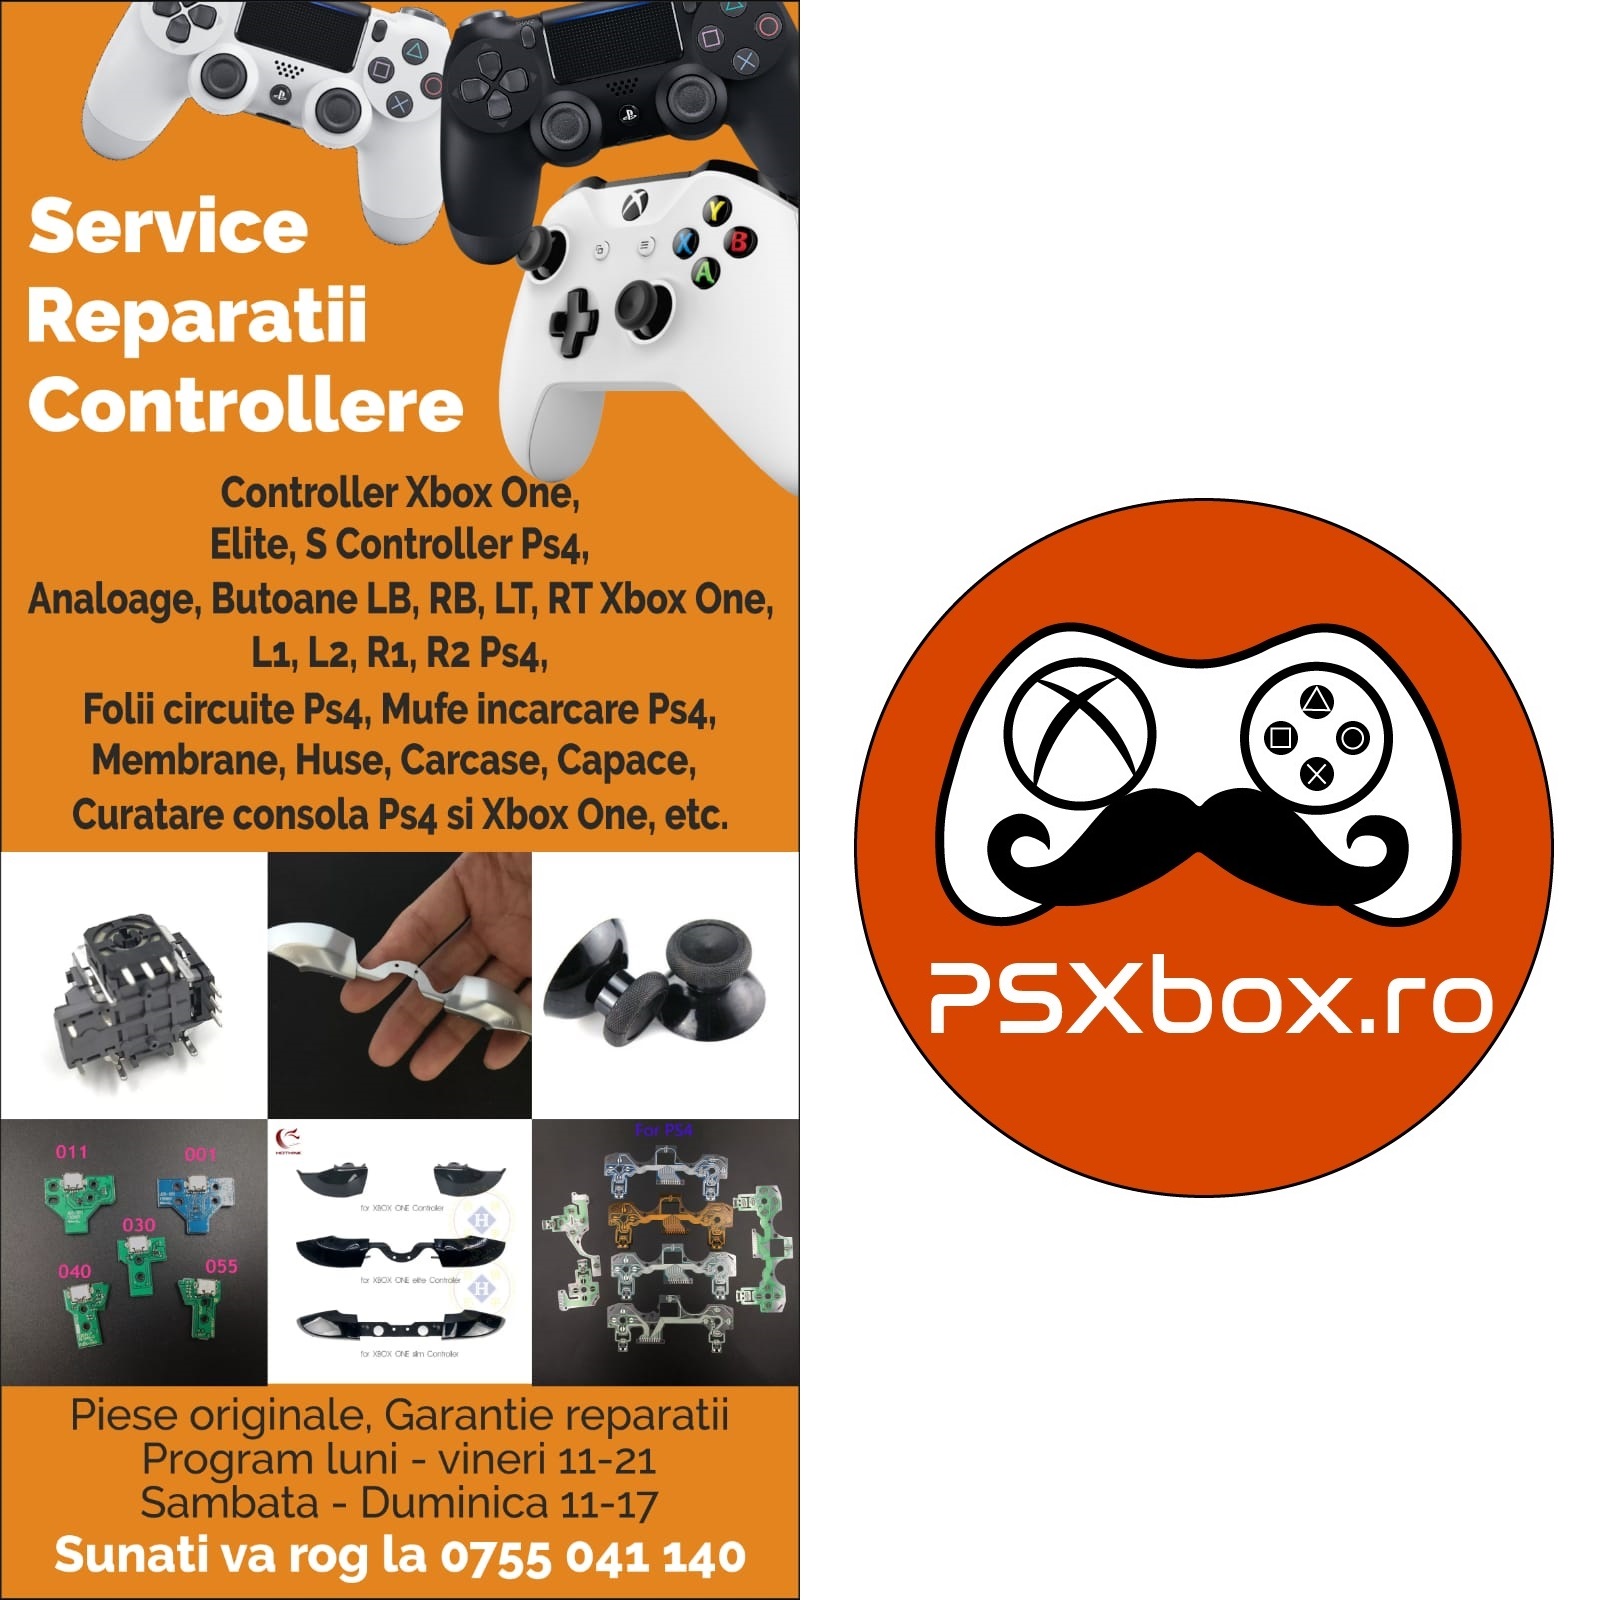 Reparatii Controller PS5 ( DualShock 4 PlayStation) inlocuire analog, modul de incarcare, inlocuire baterie, probleme conectare 0768014960